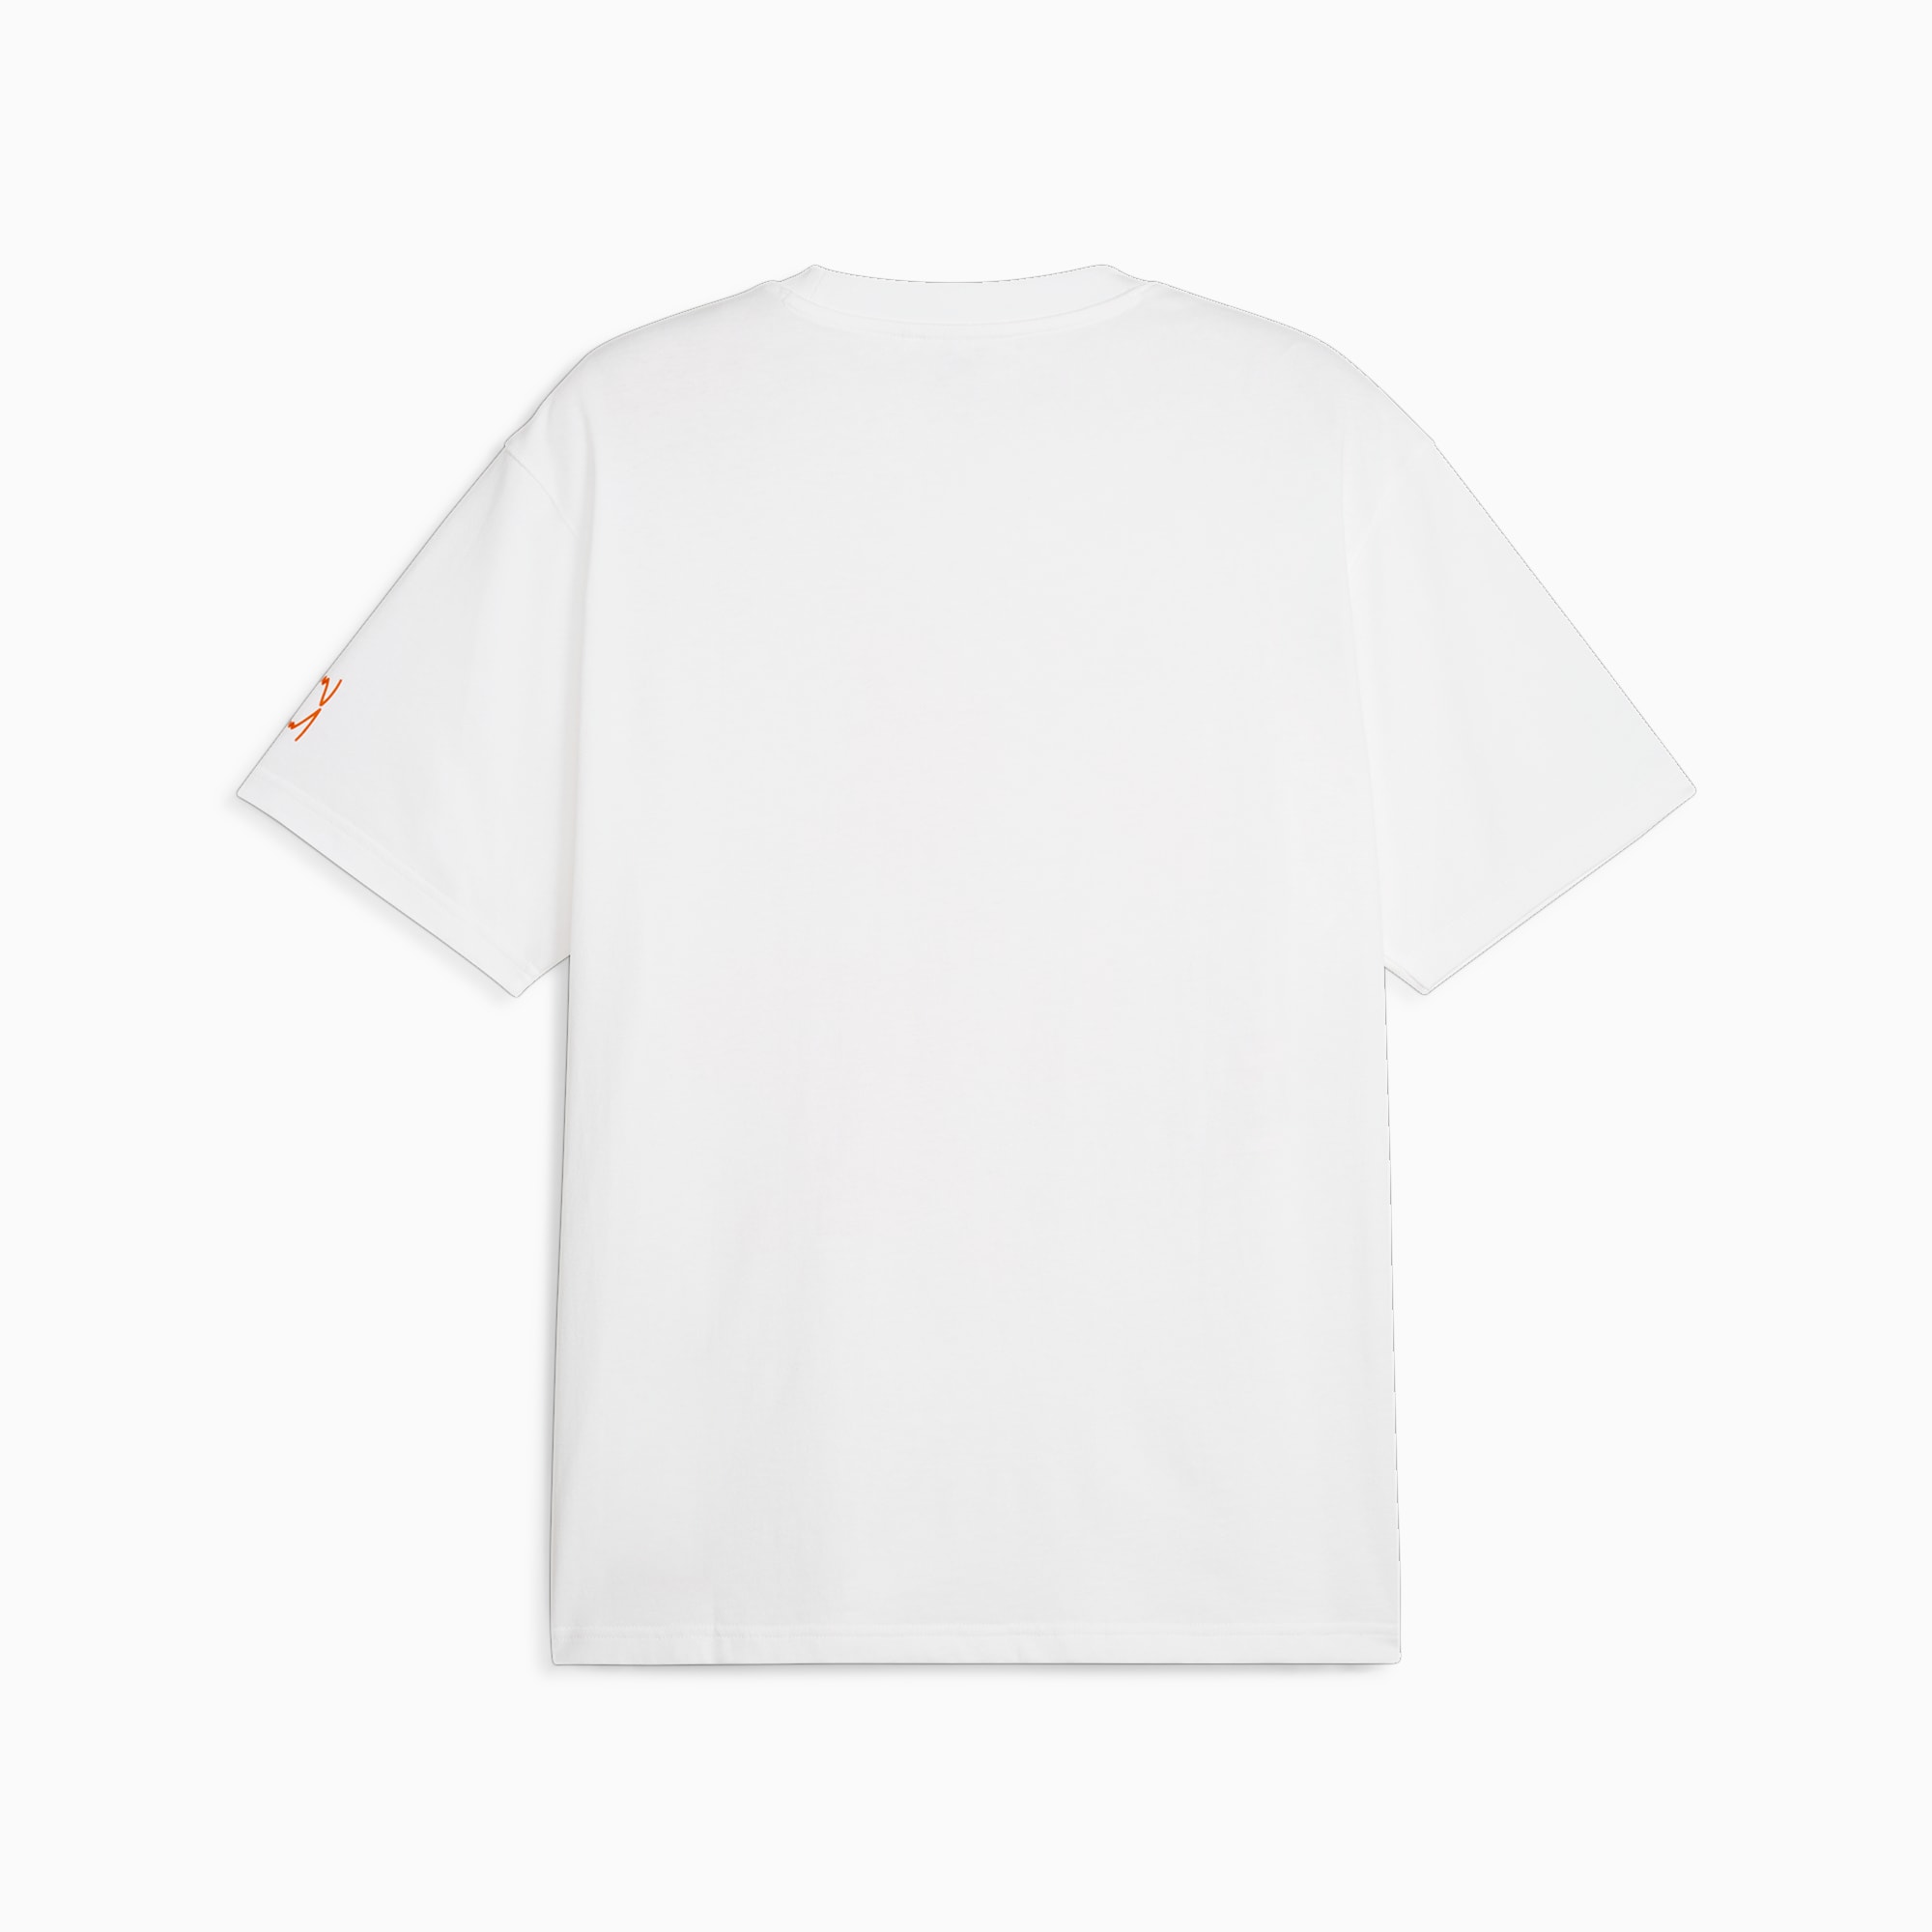 NEW Clementine Apparel Men's T-Shirt Short Sleeve Crew Neck White  Color.Size M